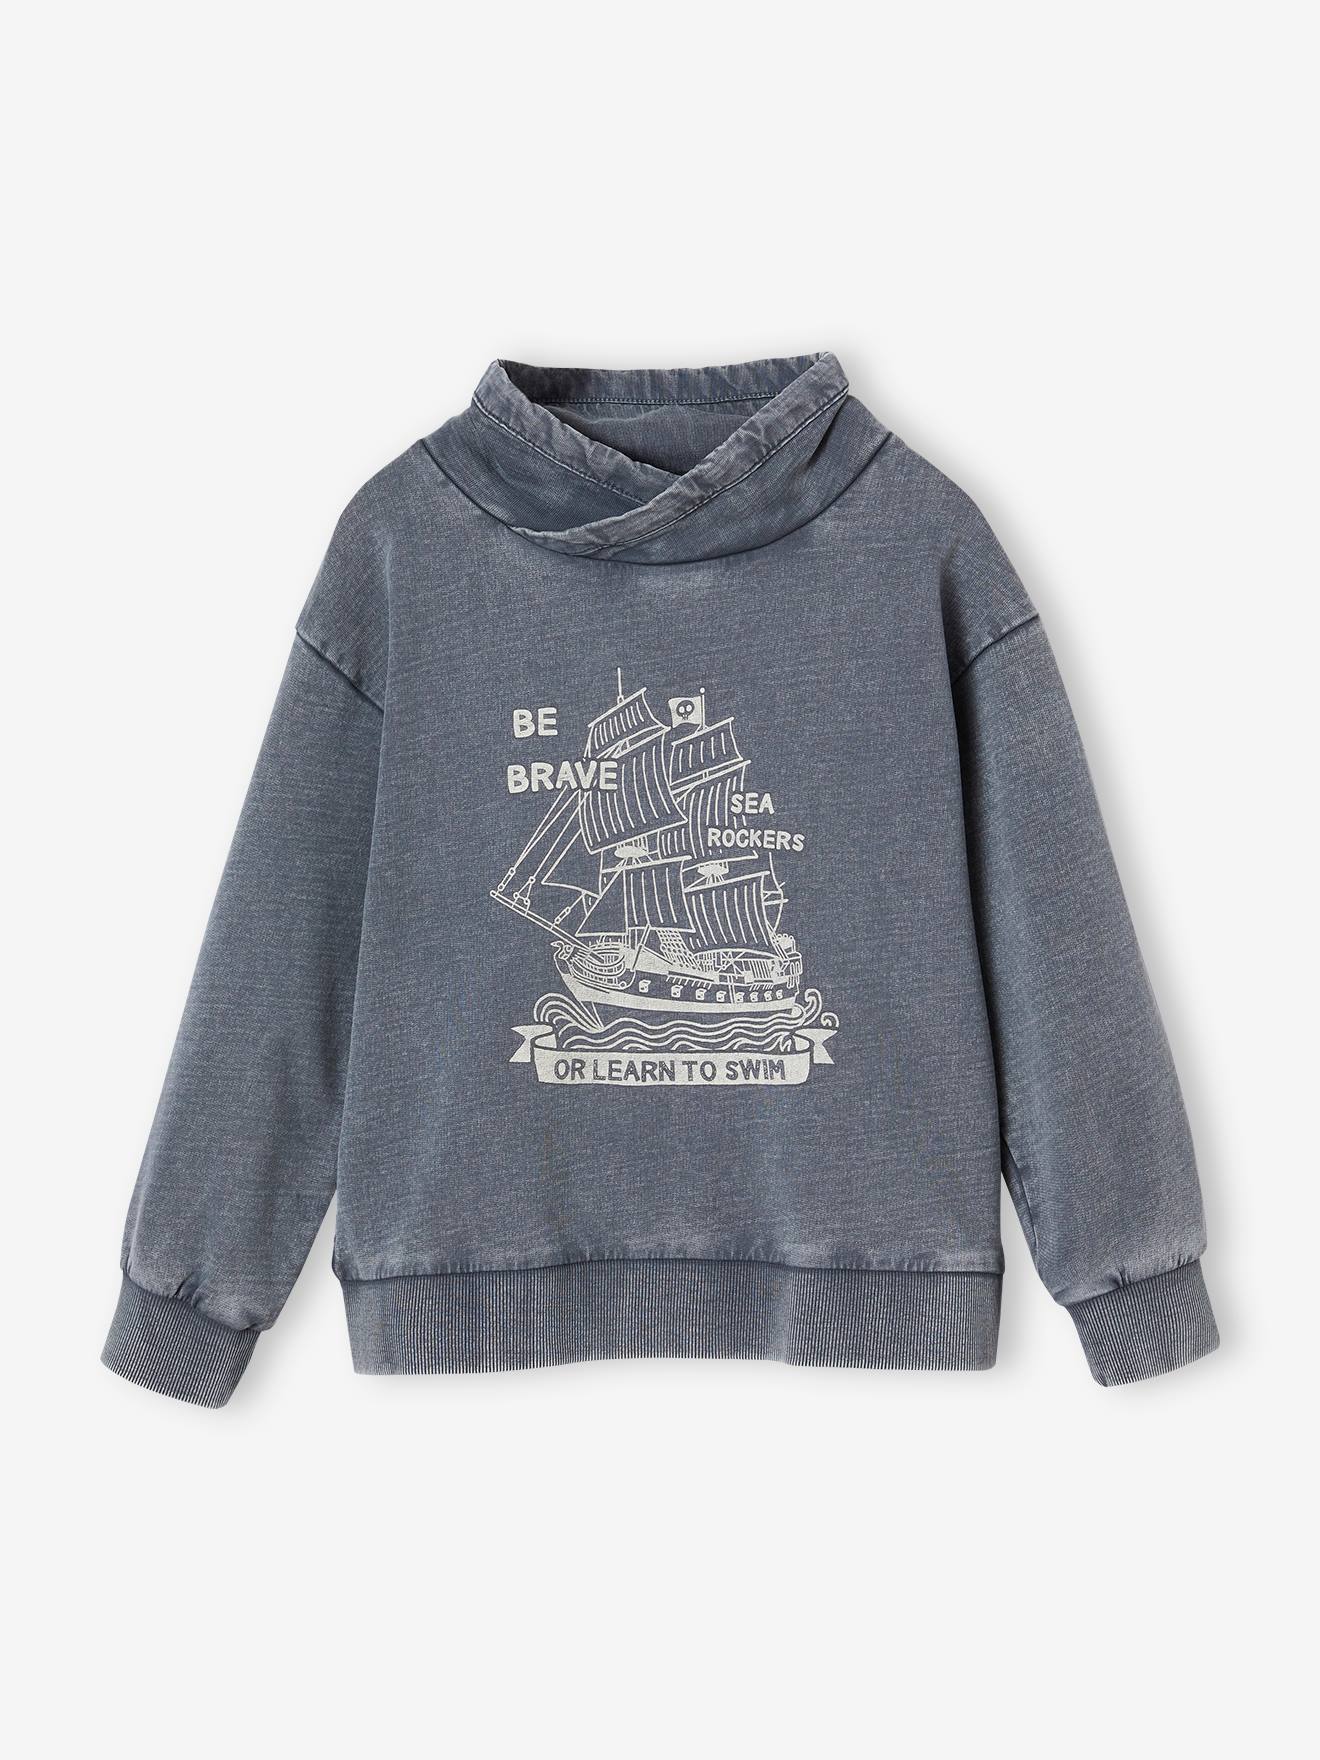 Sweatshirt with Snood Collar, Pirate Ship Motif & Faded Effect for Boys marl grey